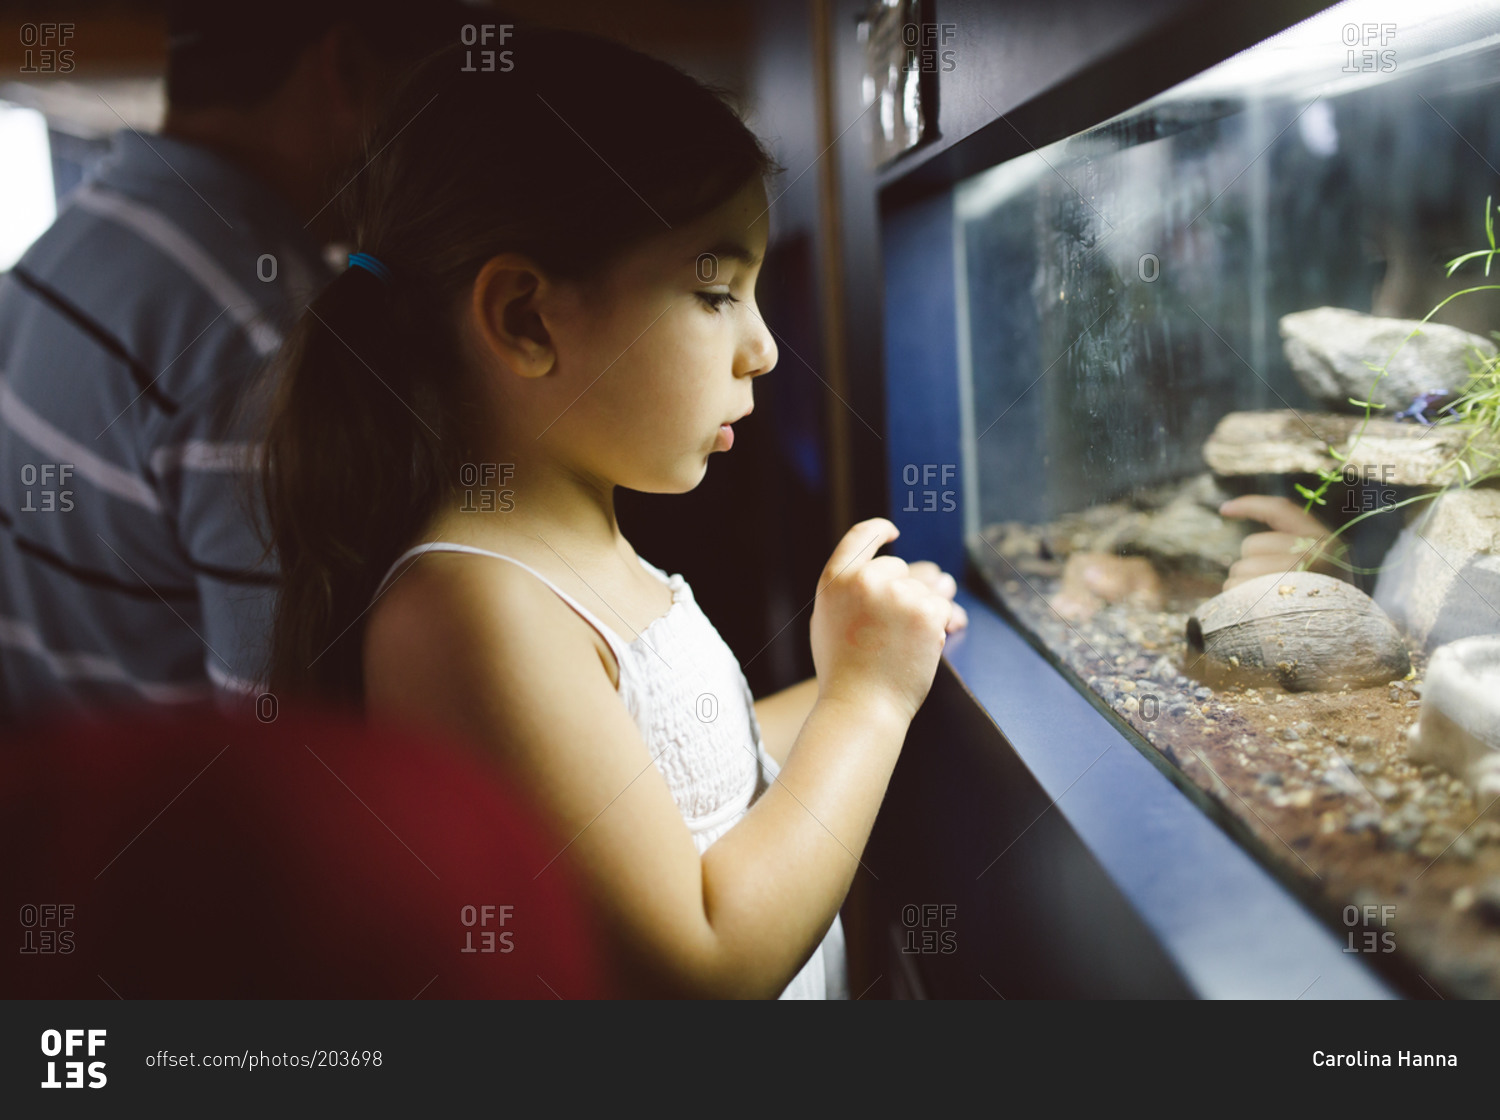 Young girl looking in a reptile habitat tank